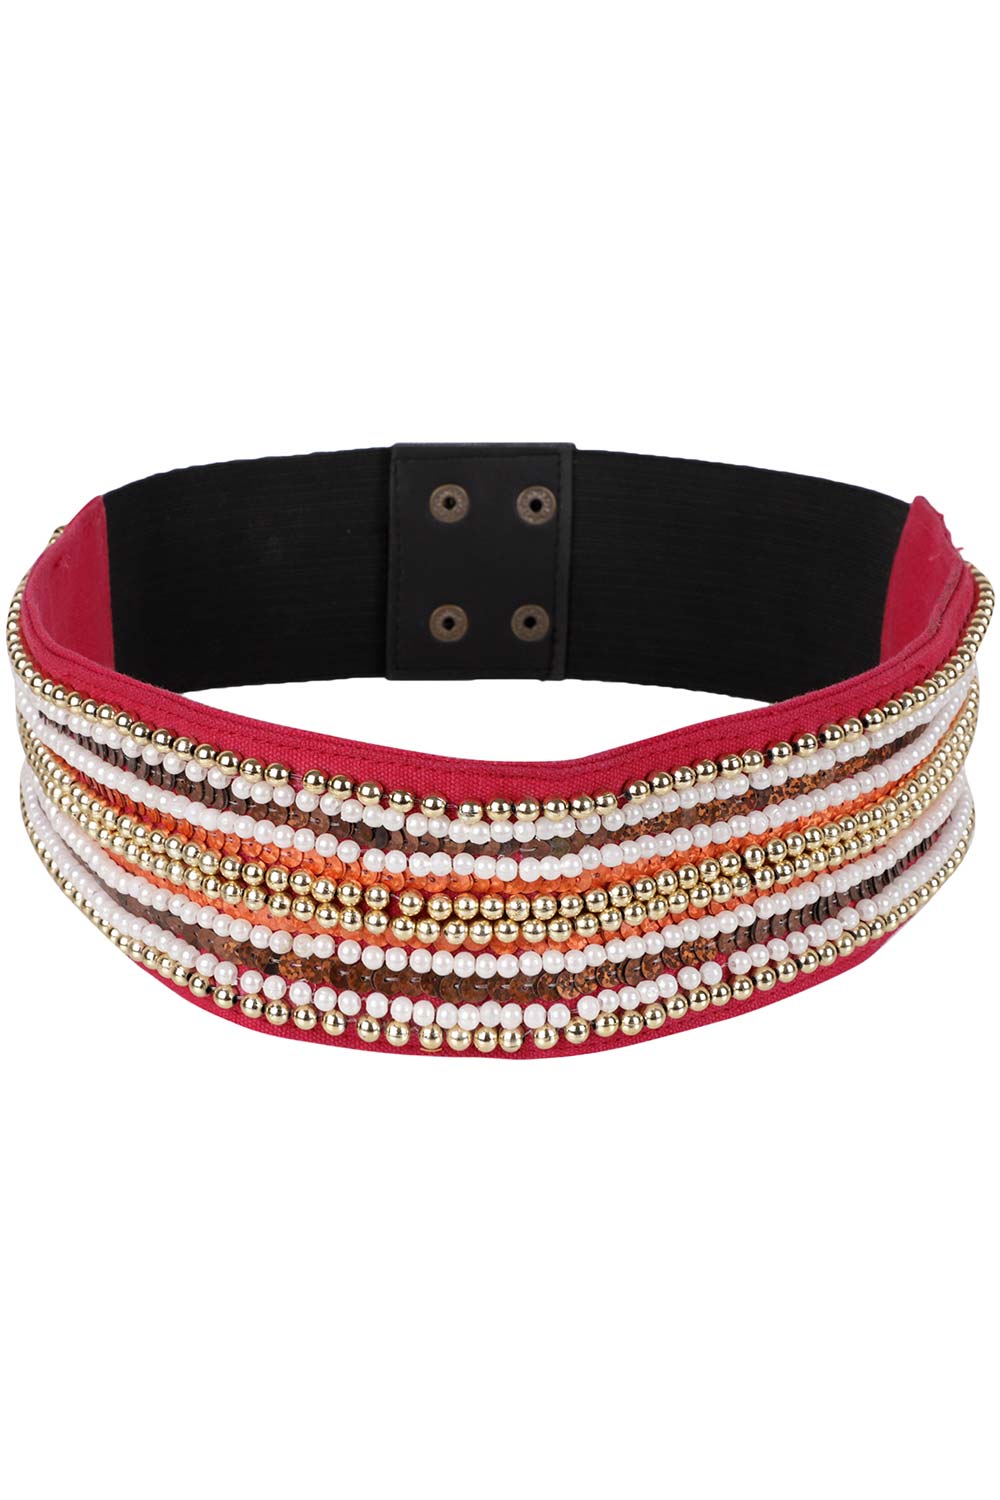 Buy Embellished Saree Belt in Pink & Multi Online - One Minute Saree